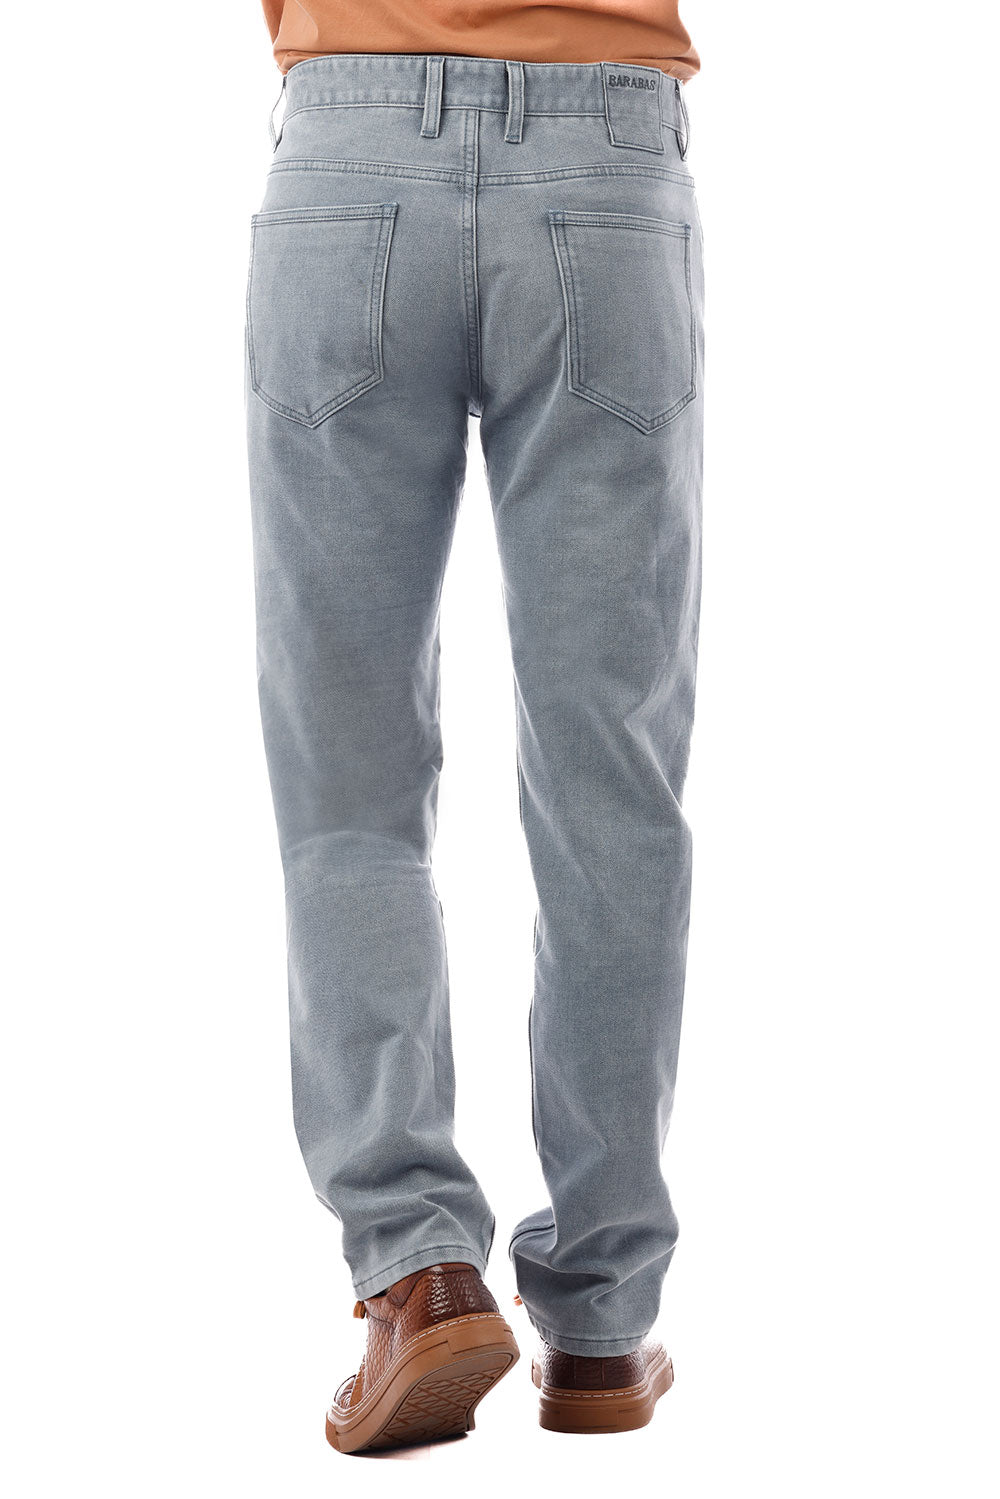 Barabas Men's Solid Color Premium Stretch Denim Jeans 3SN100 Grey